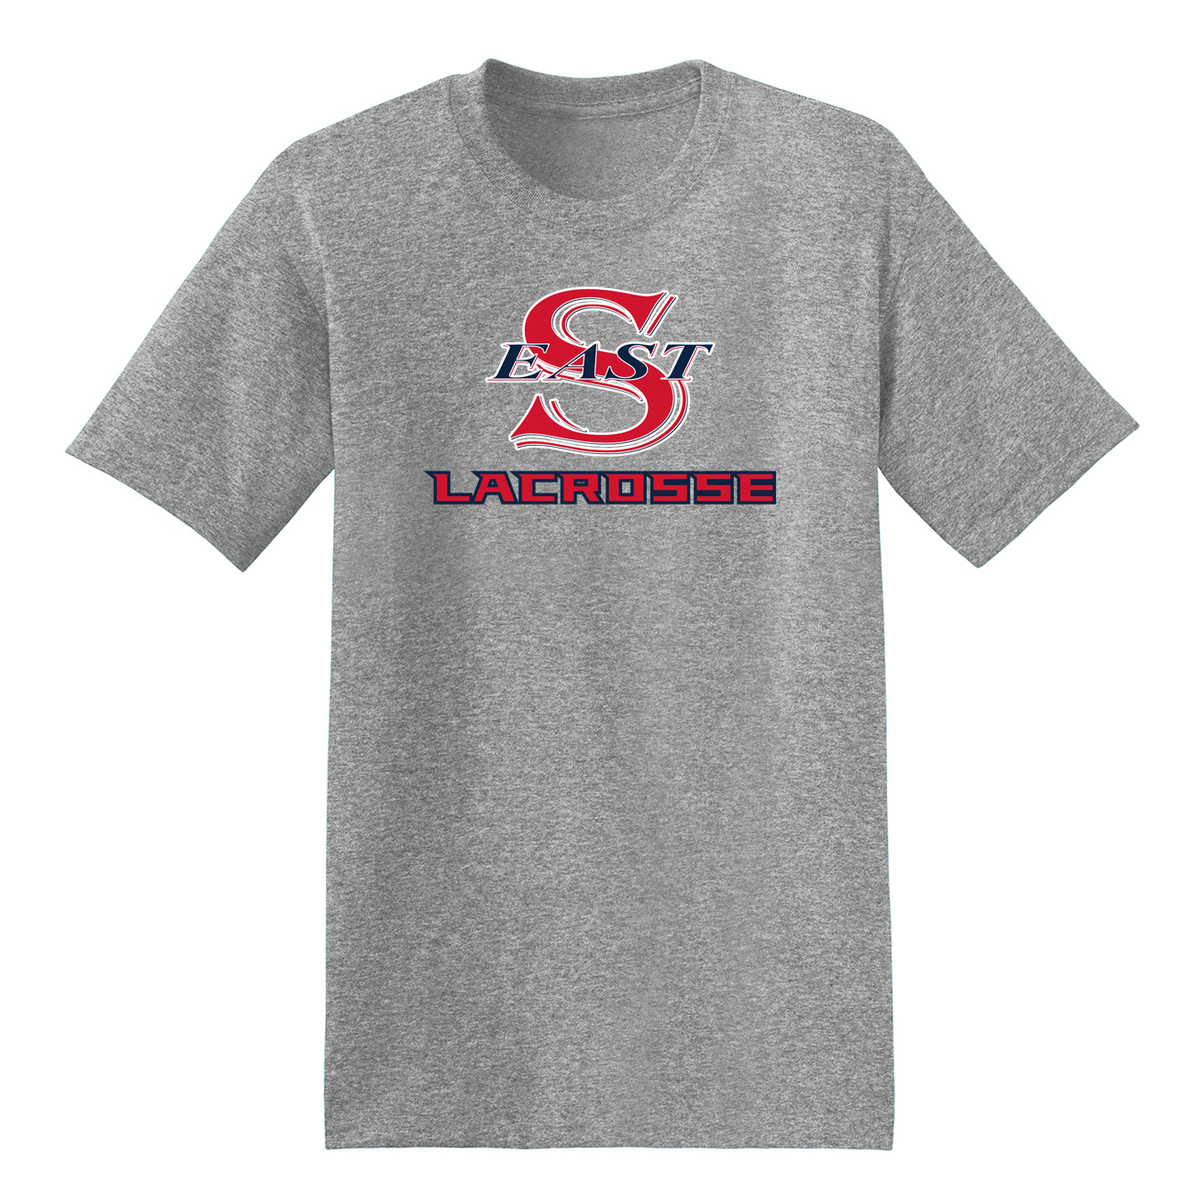 Smithtown East Lacrosse T-Shirt